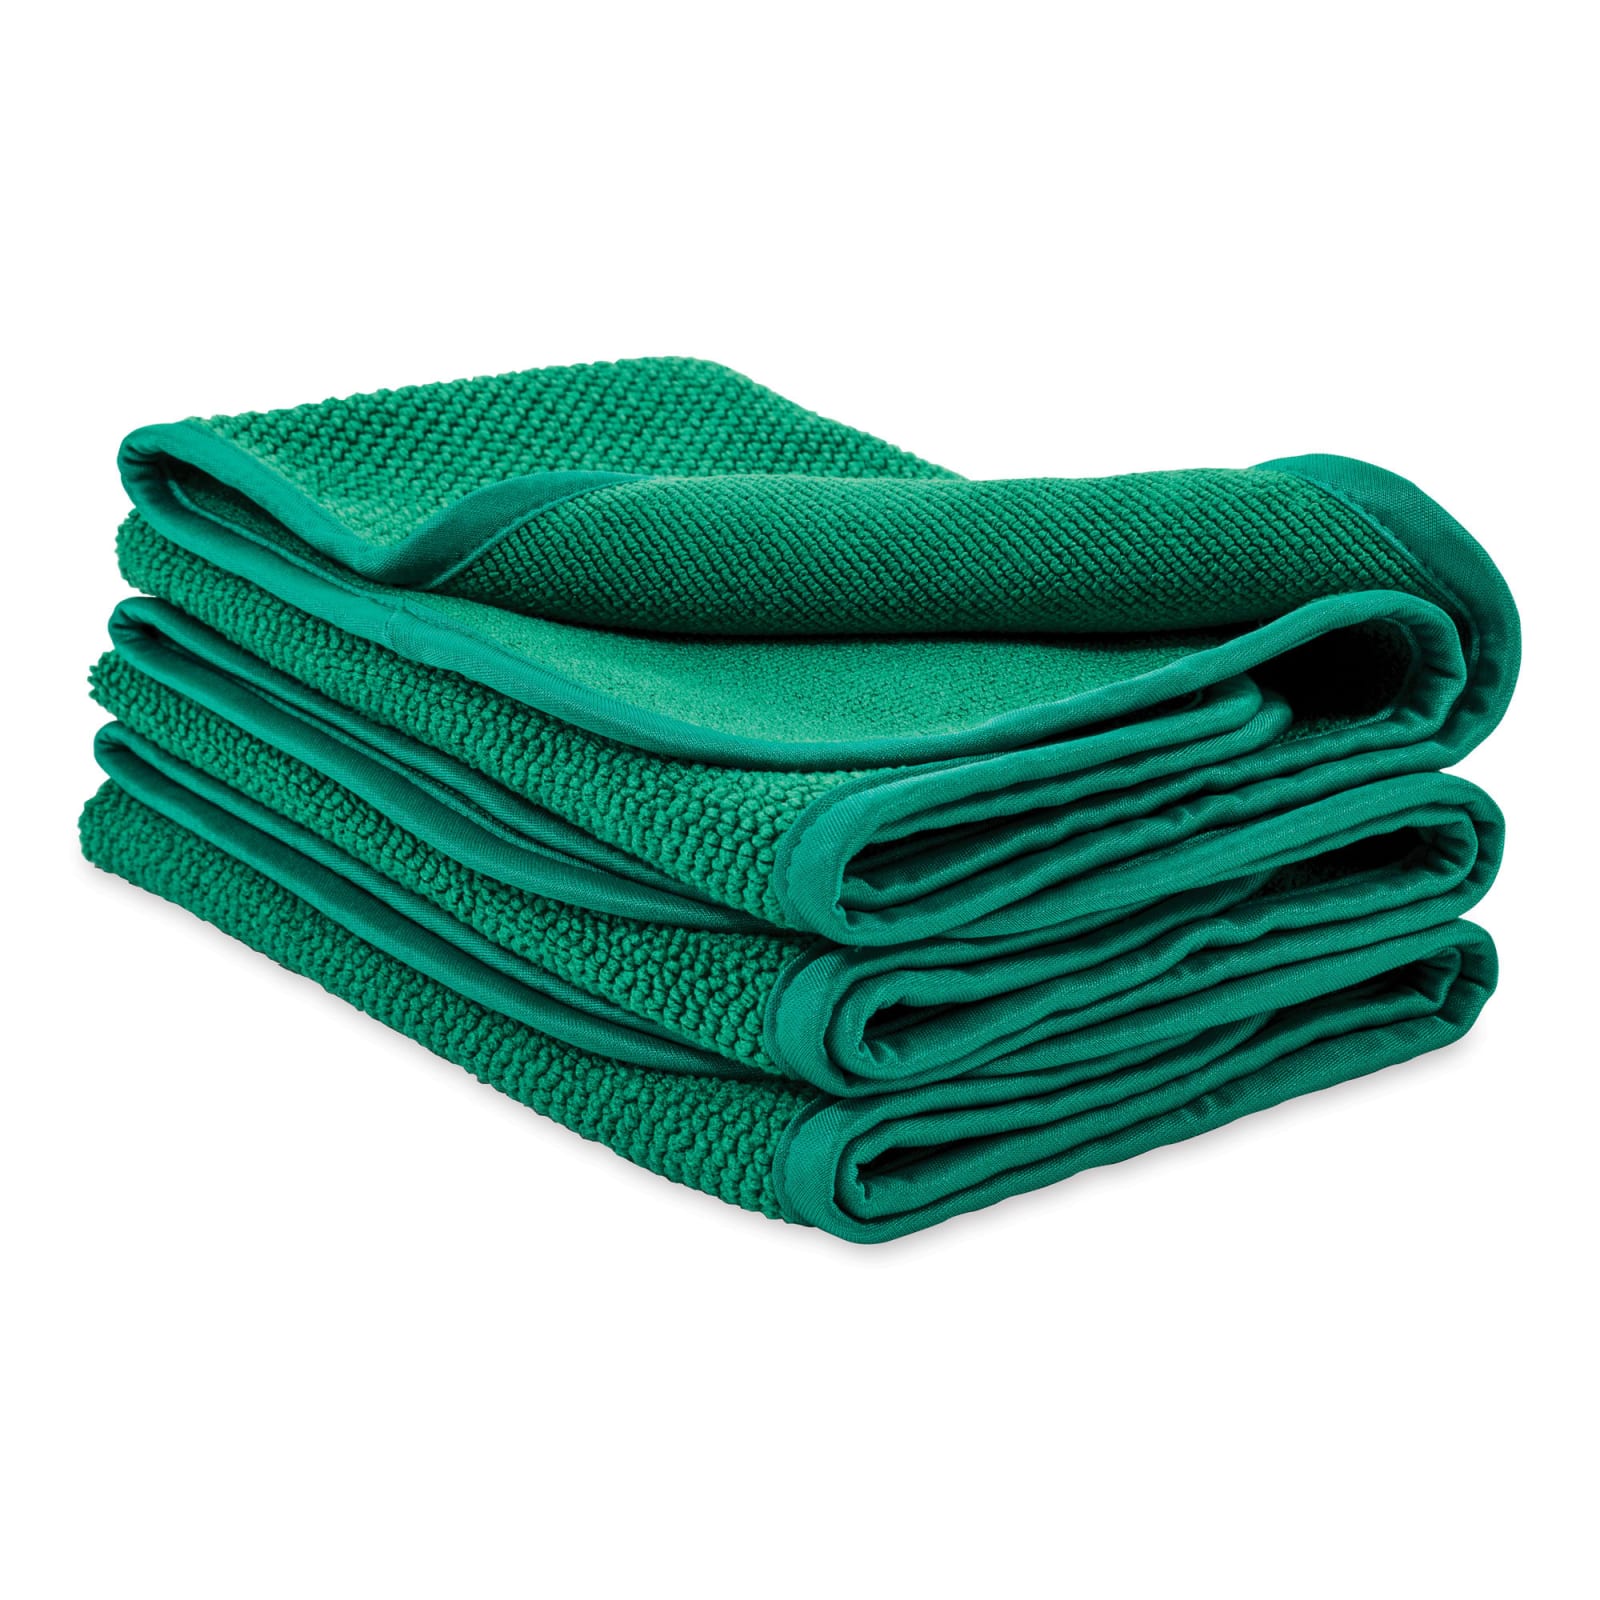 Dual Weave Interior Towels, Set of 3 - Griot's Garage